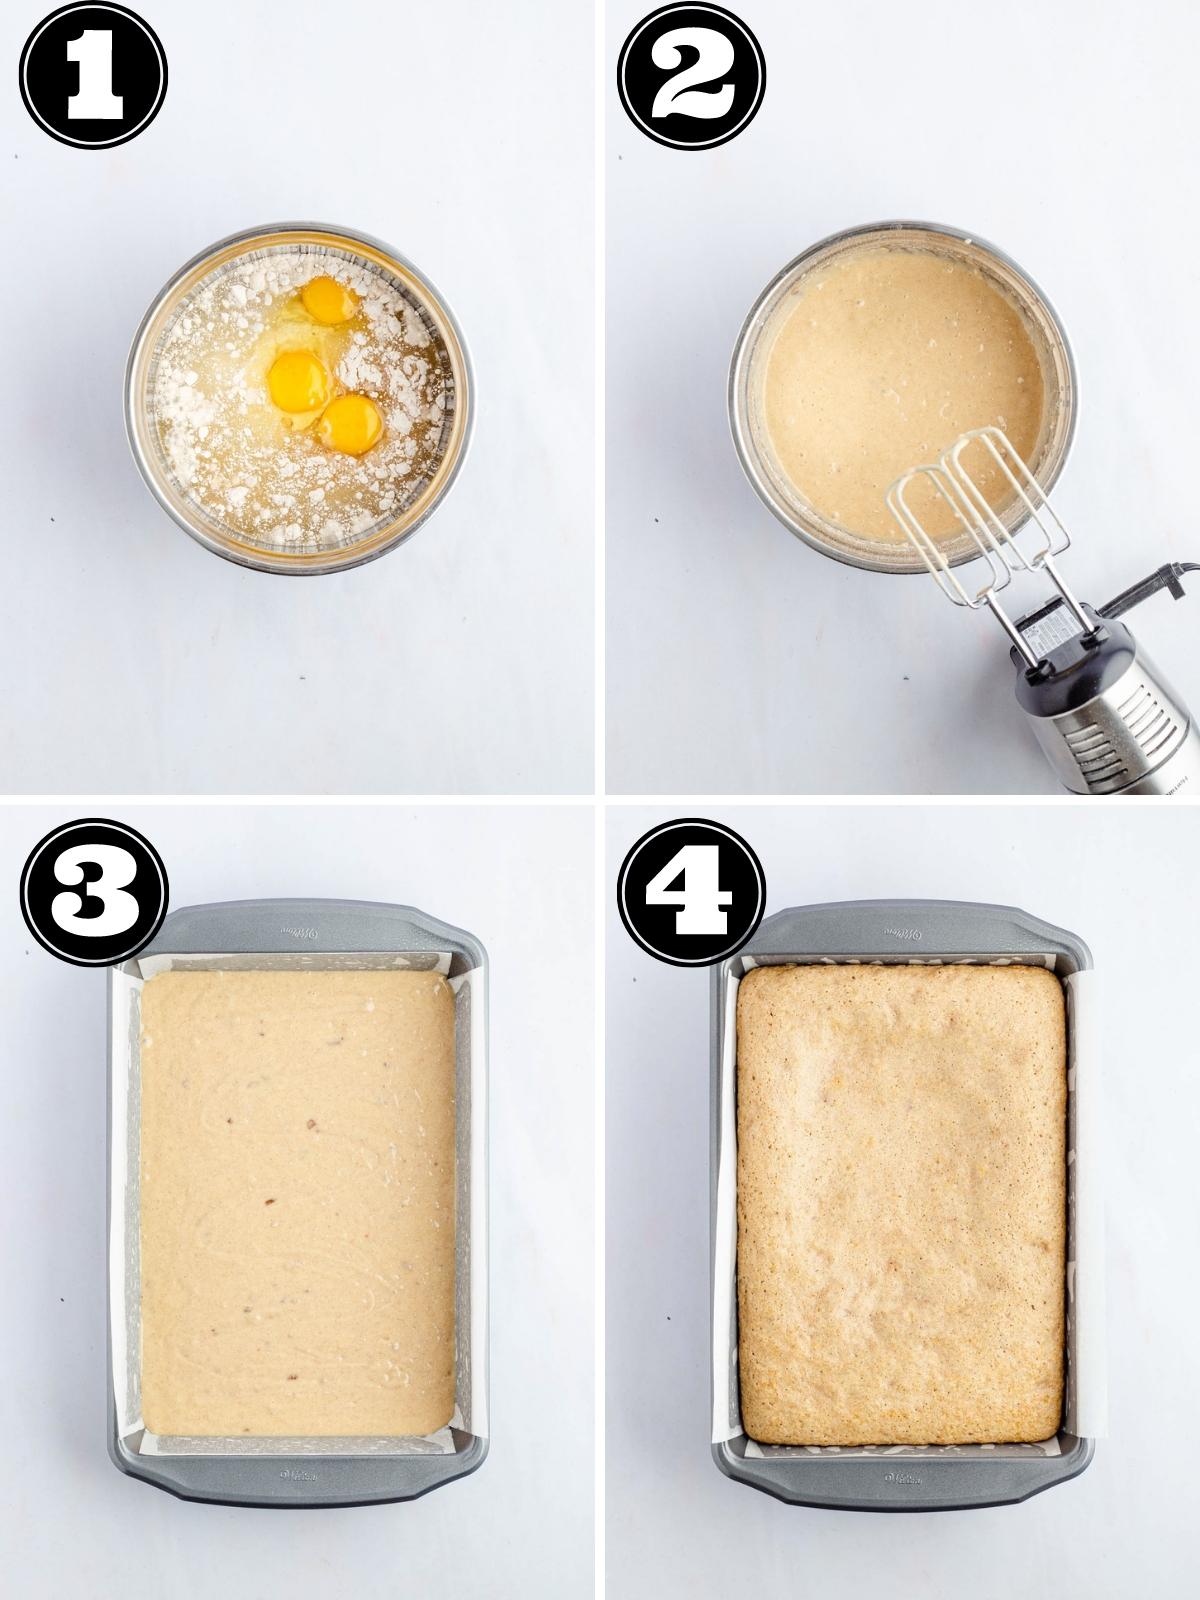 Numbered steps to bake cinnamon toast cake mix.